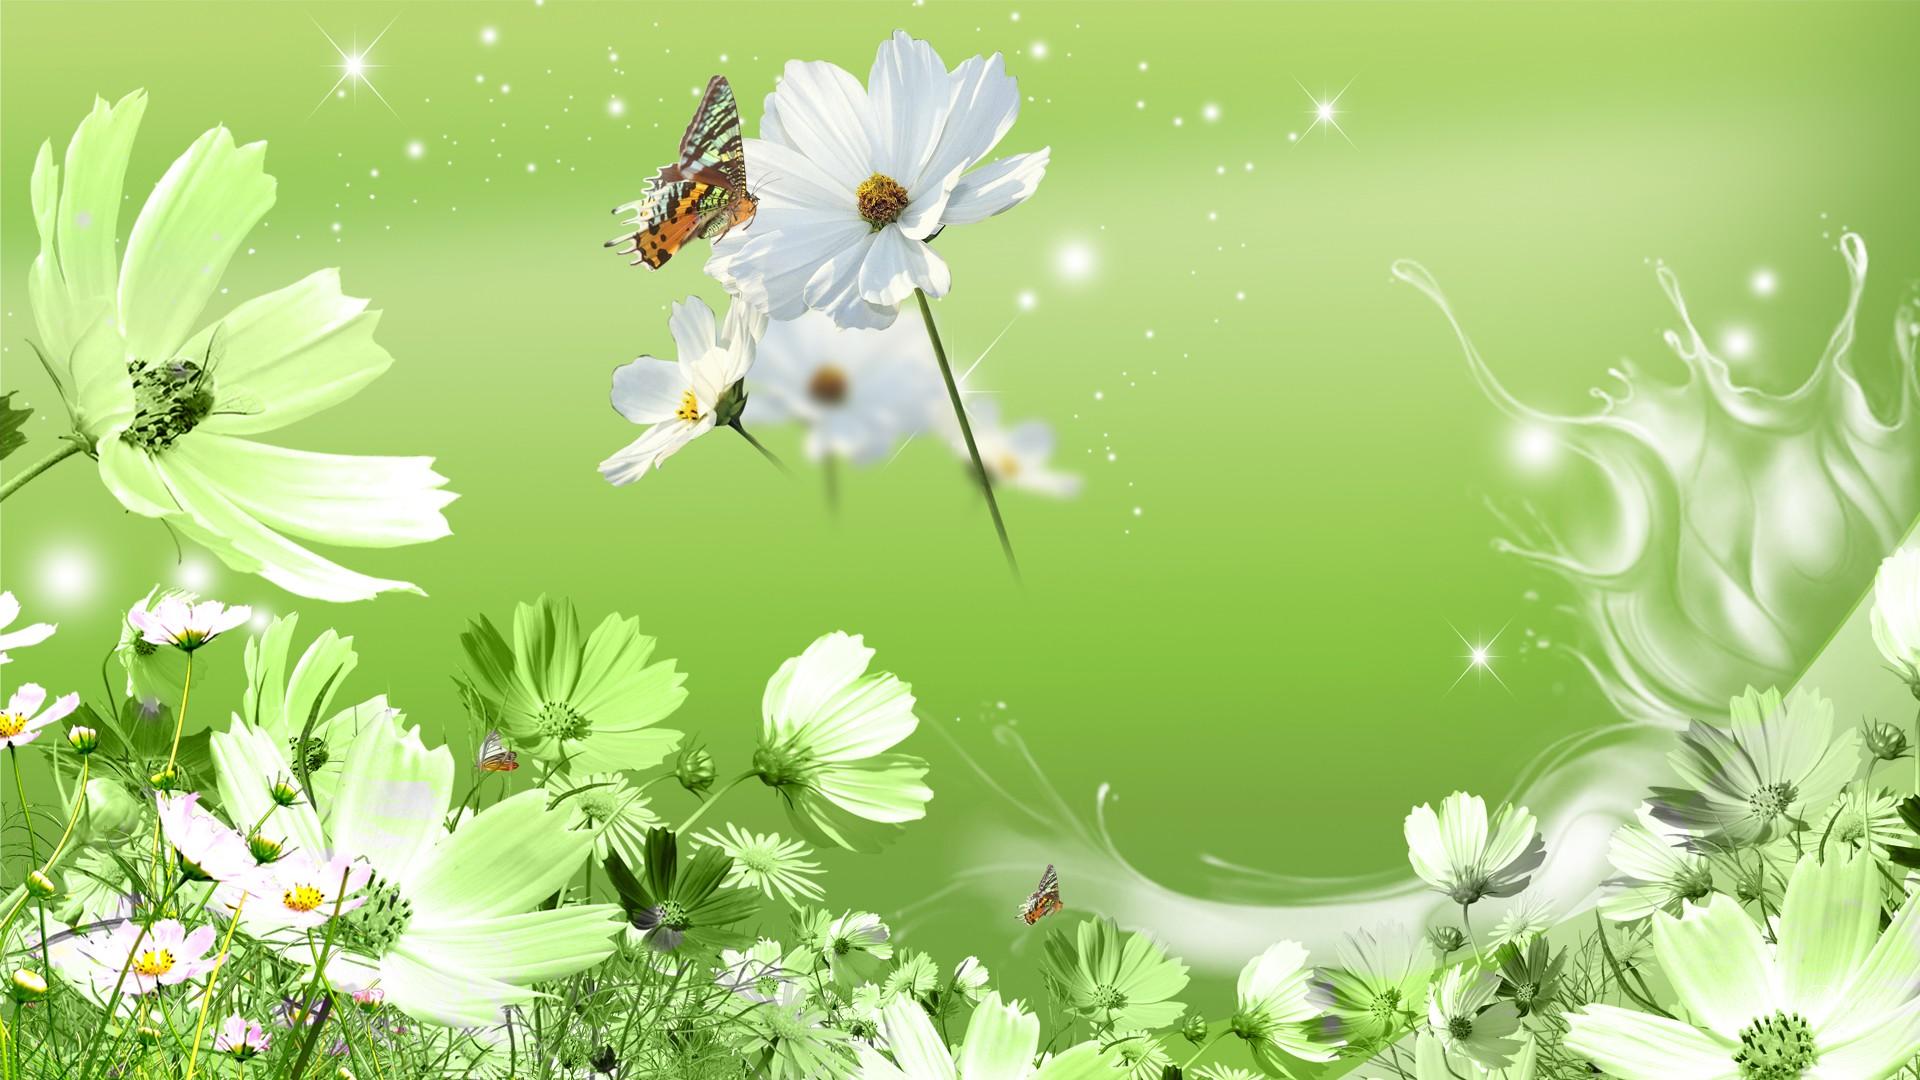 Free download Green Flower Wallpaper Green Flower PC Backgrounds [1920x1080] for your Desktop